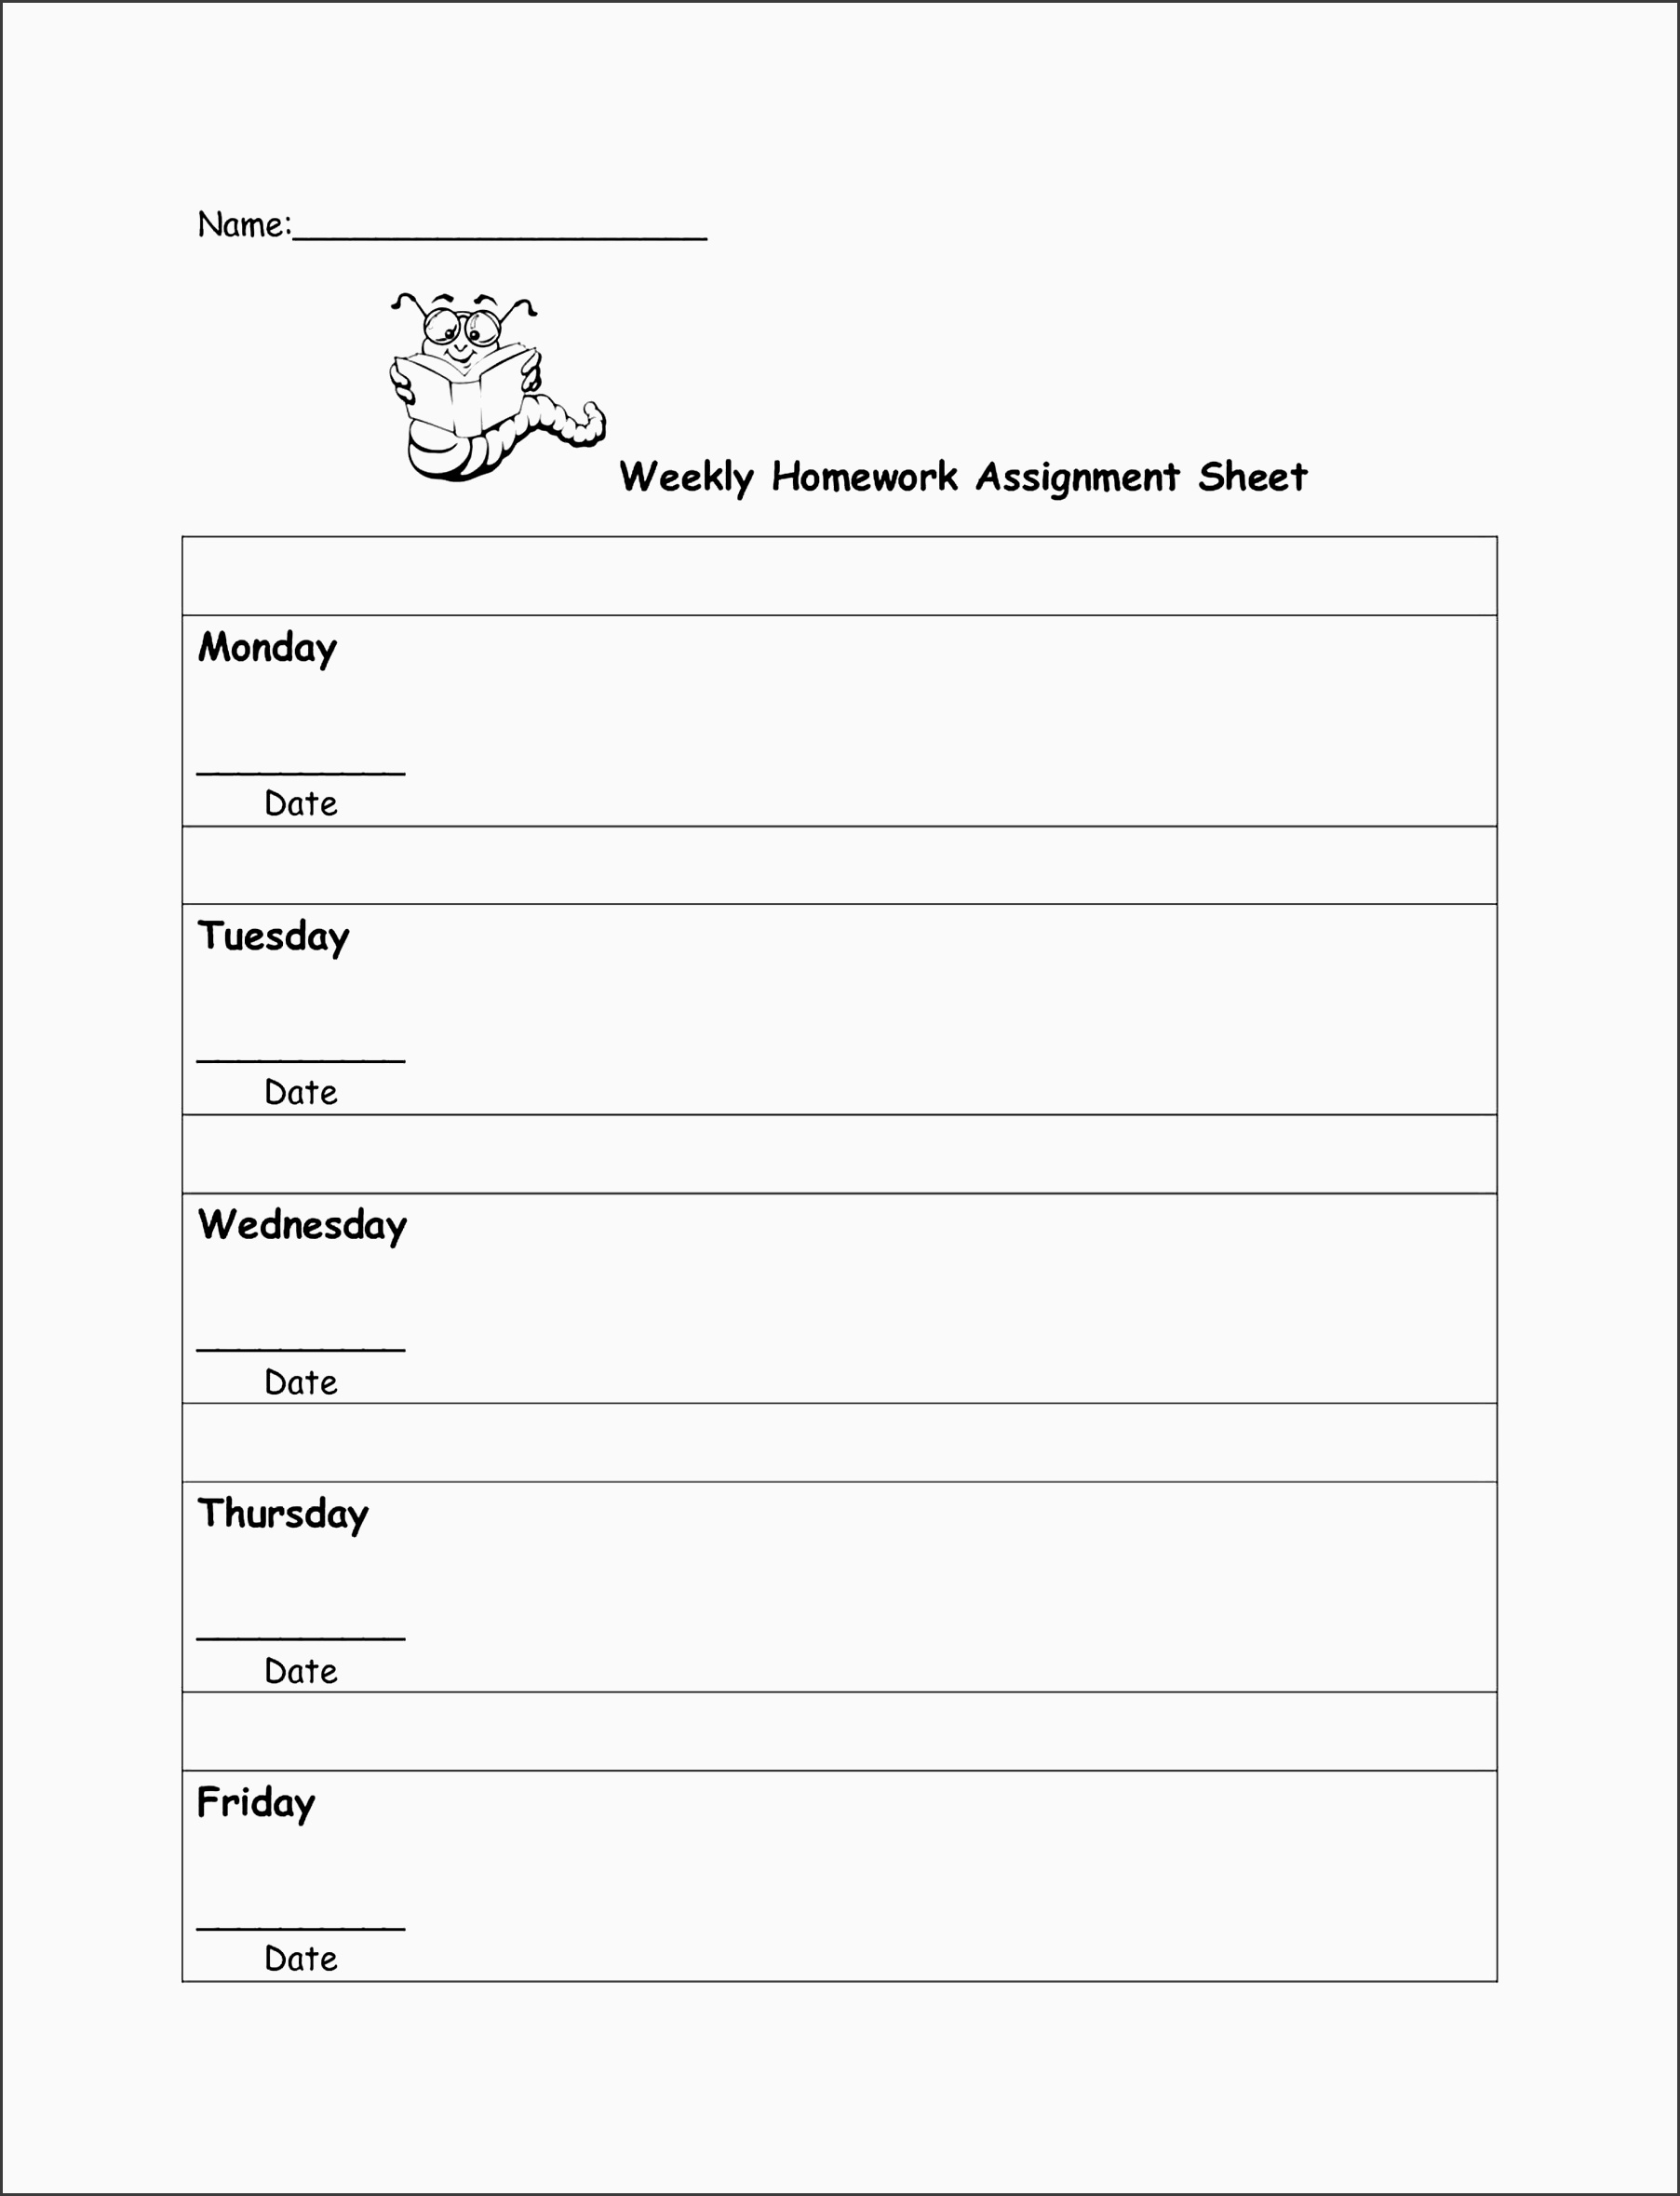 student planner printable homework as free excel templates academic homework schedule template calendars as free printable excel templates homework